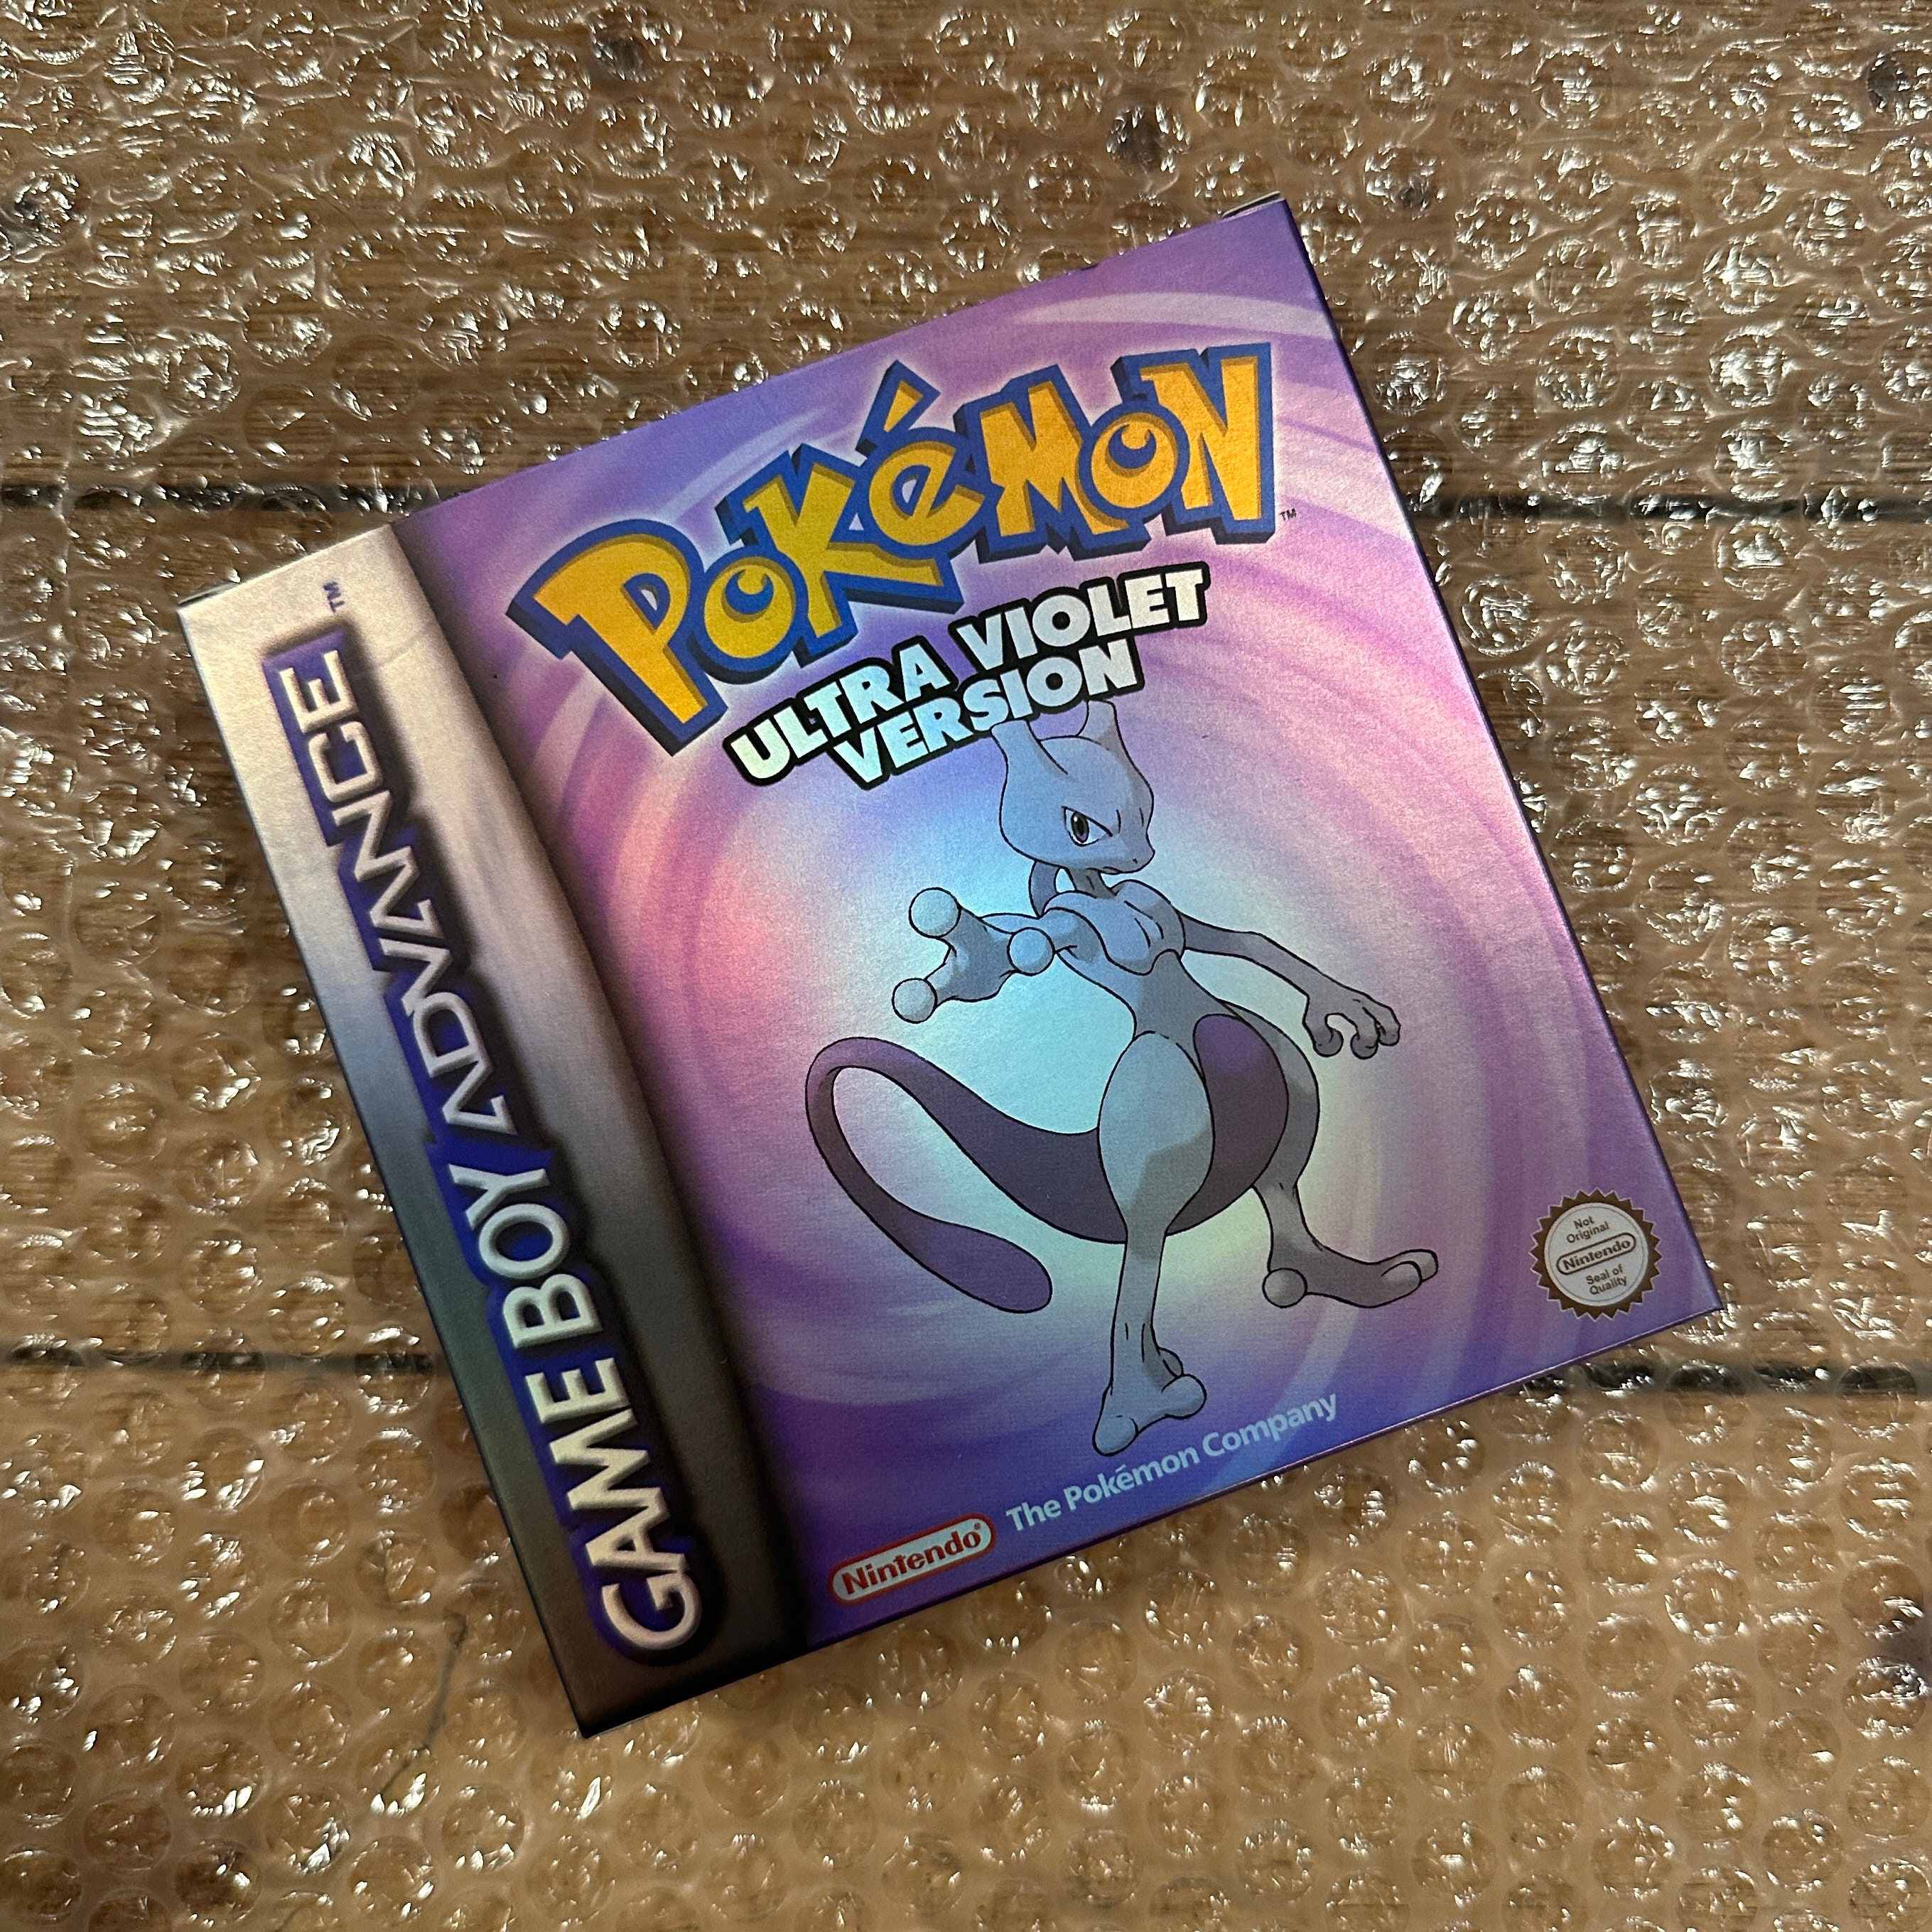 Pokemon UltraViolet - Gameboy Advance ROMs Hack - Download